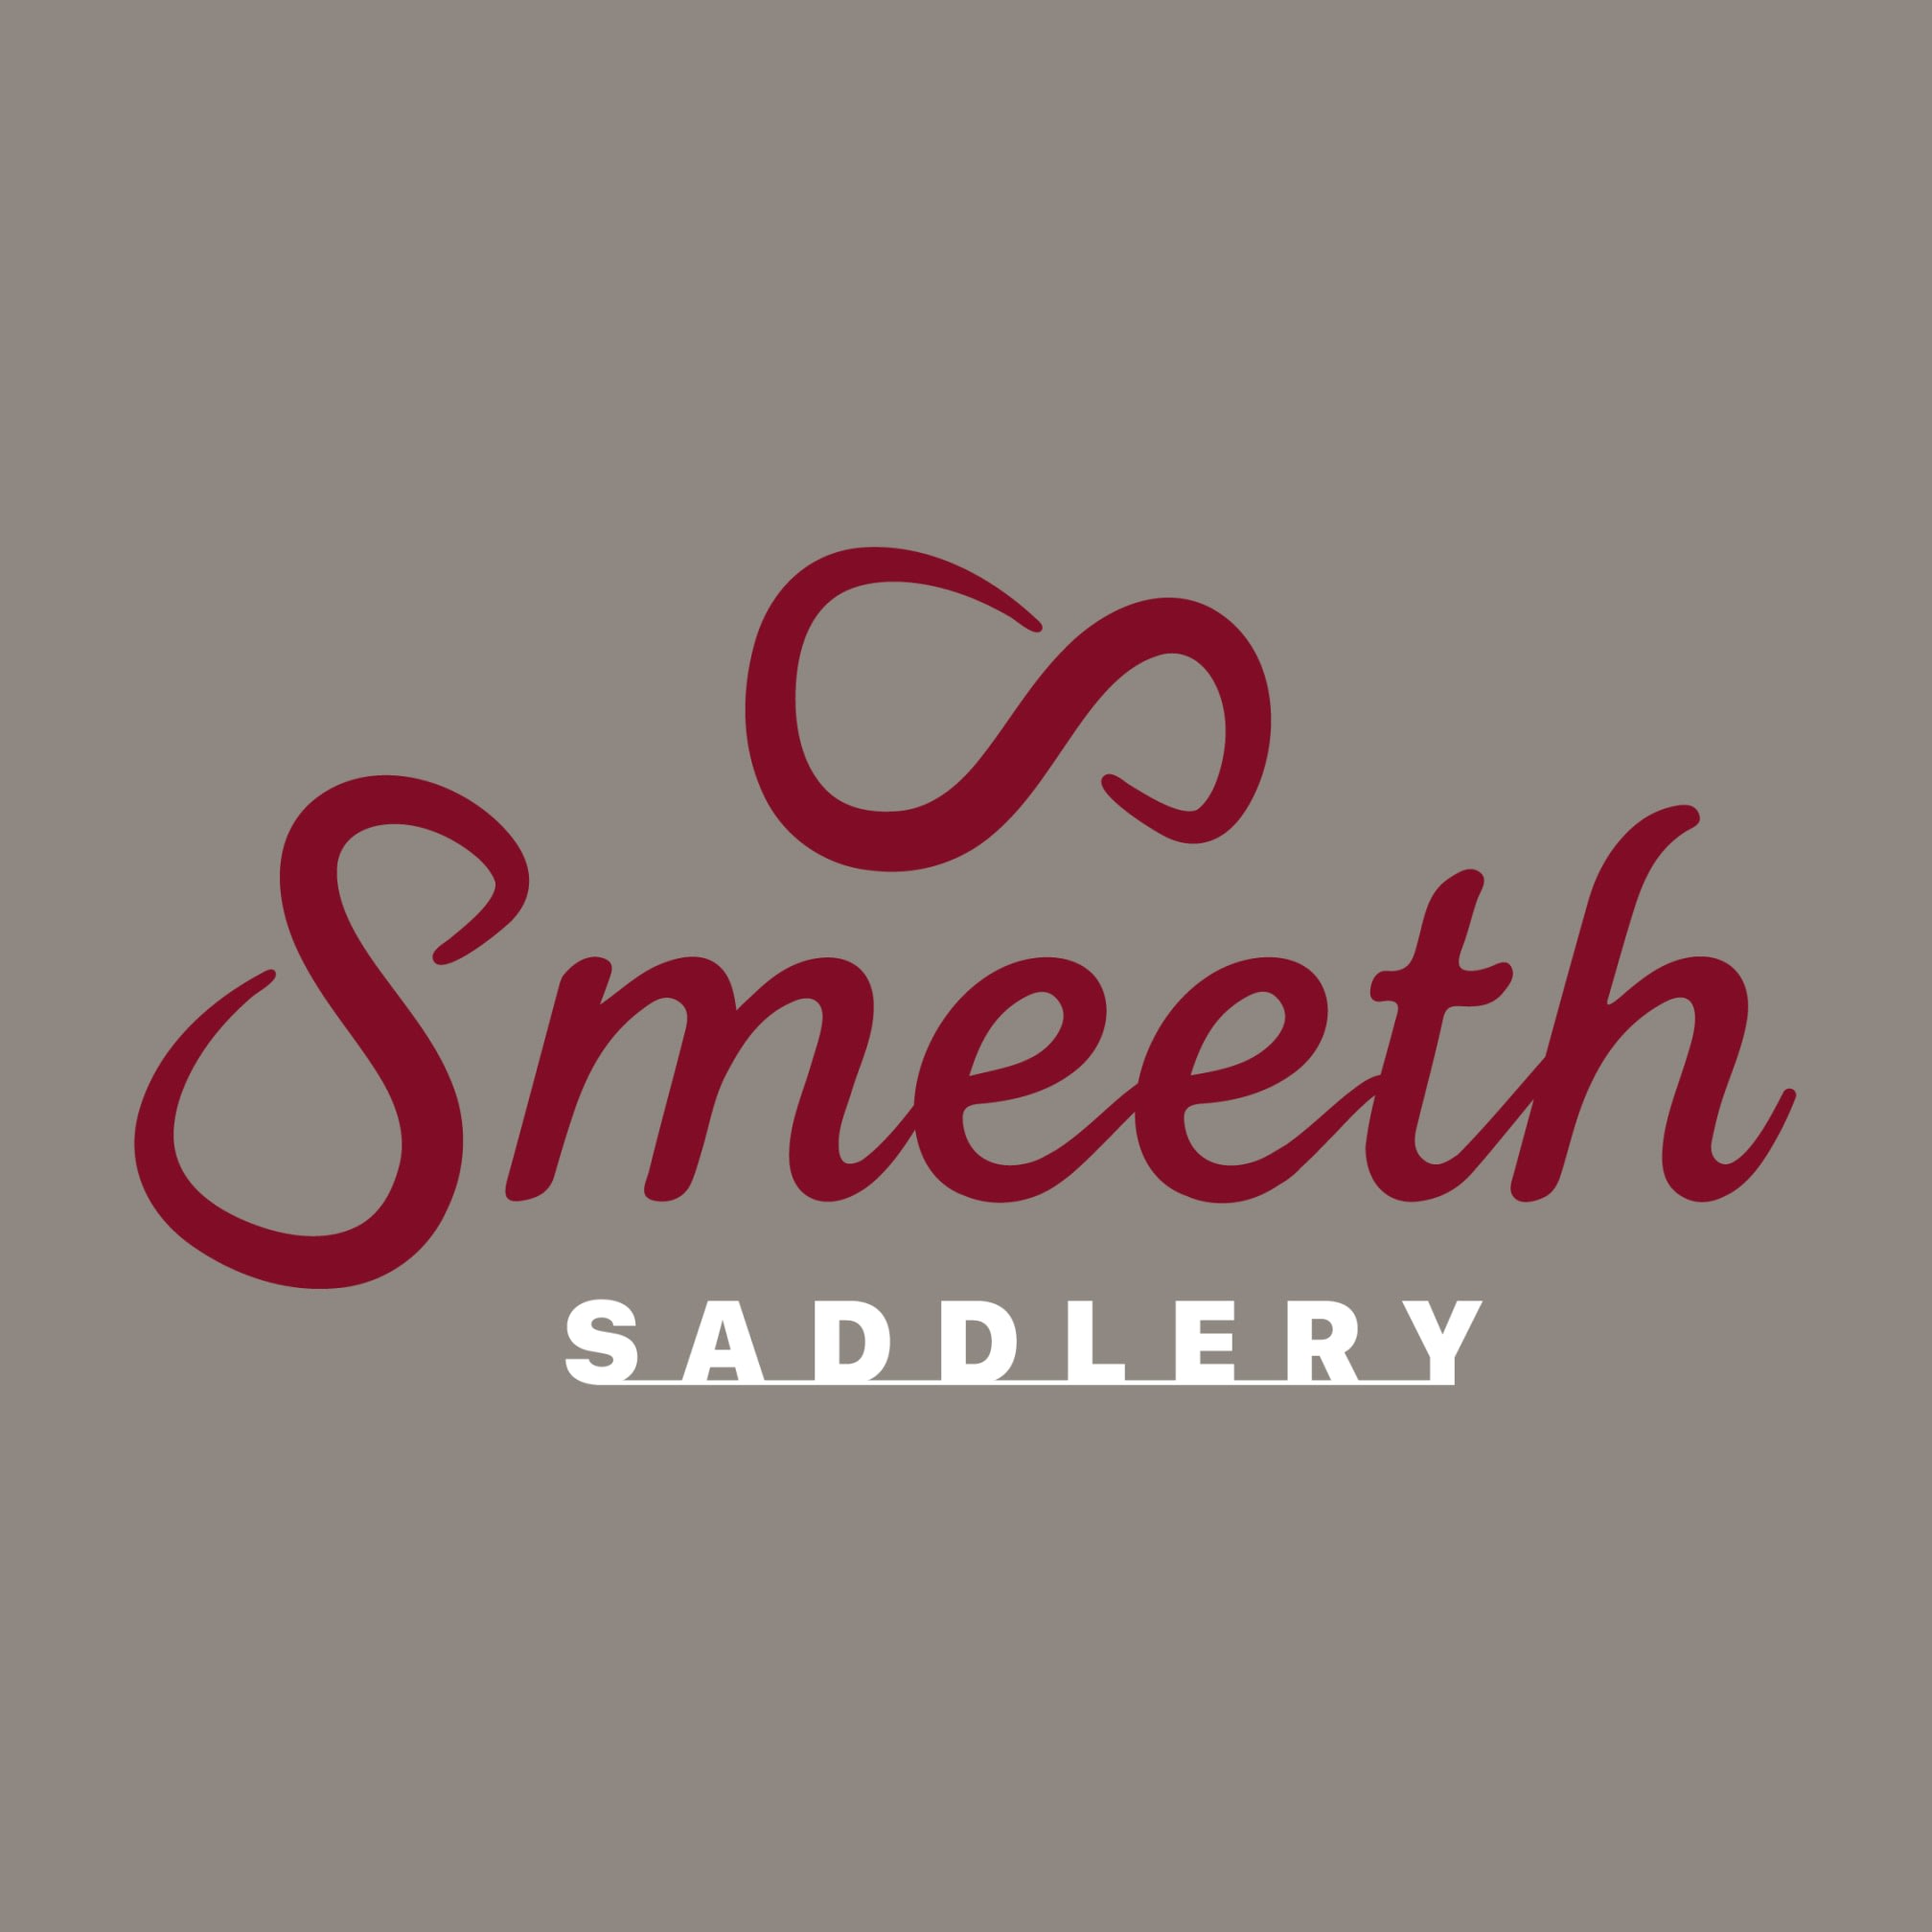 Smeeth Saddlery Logo